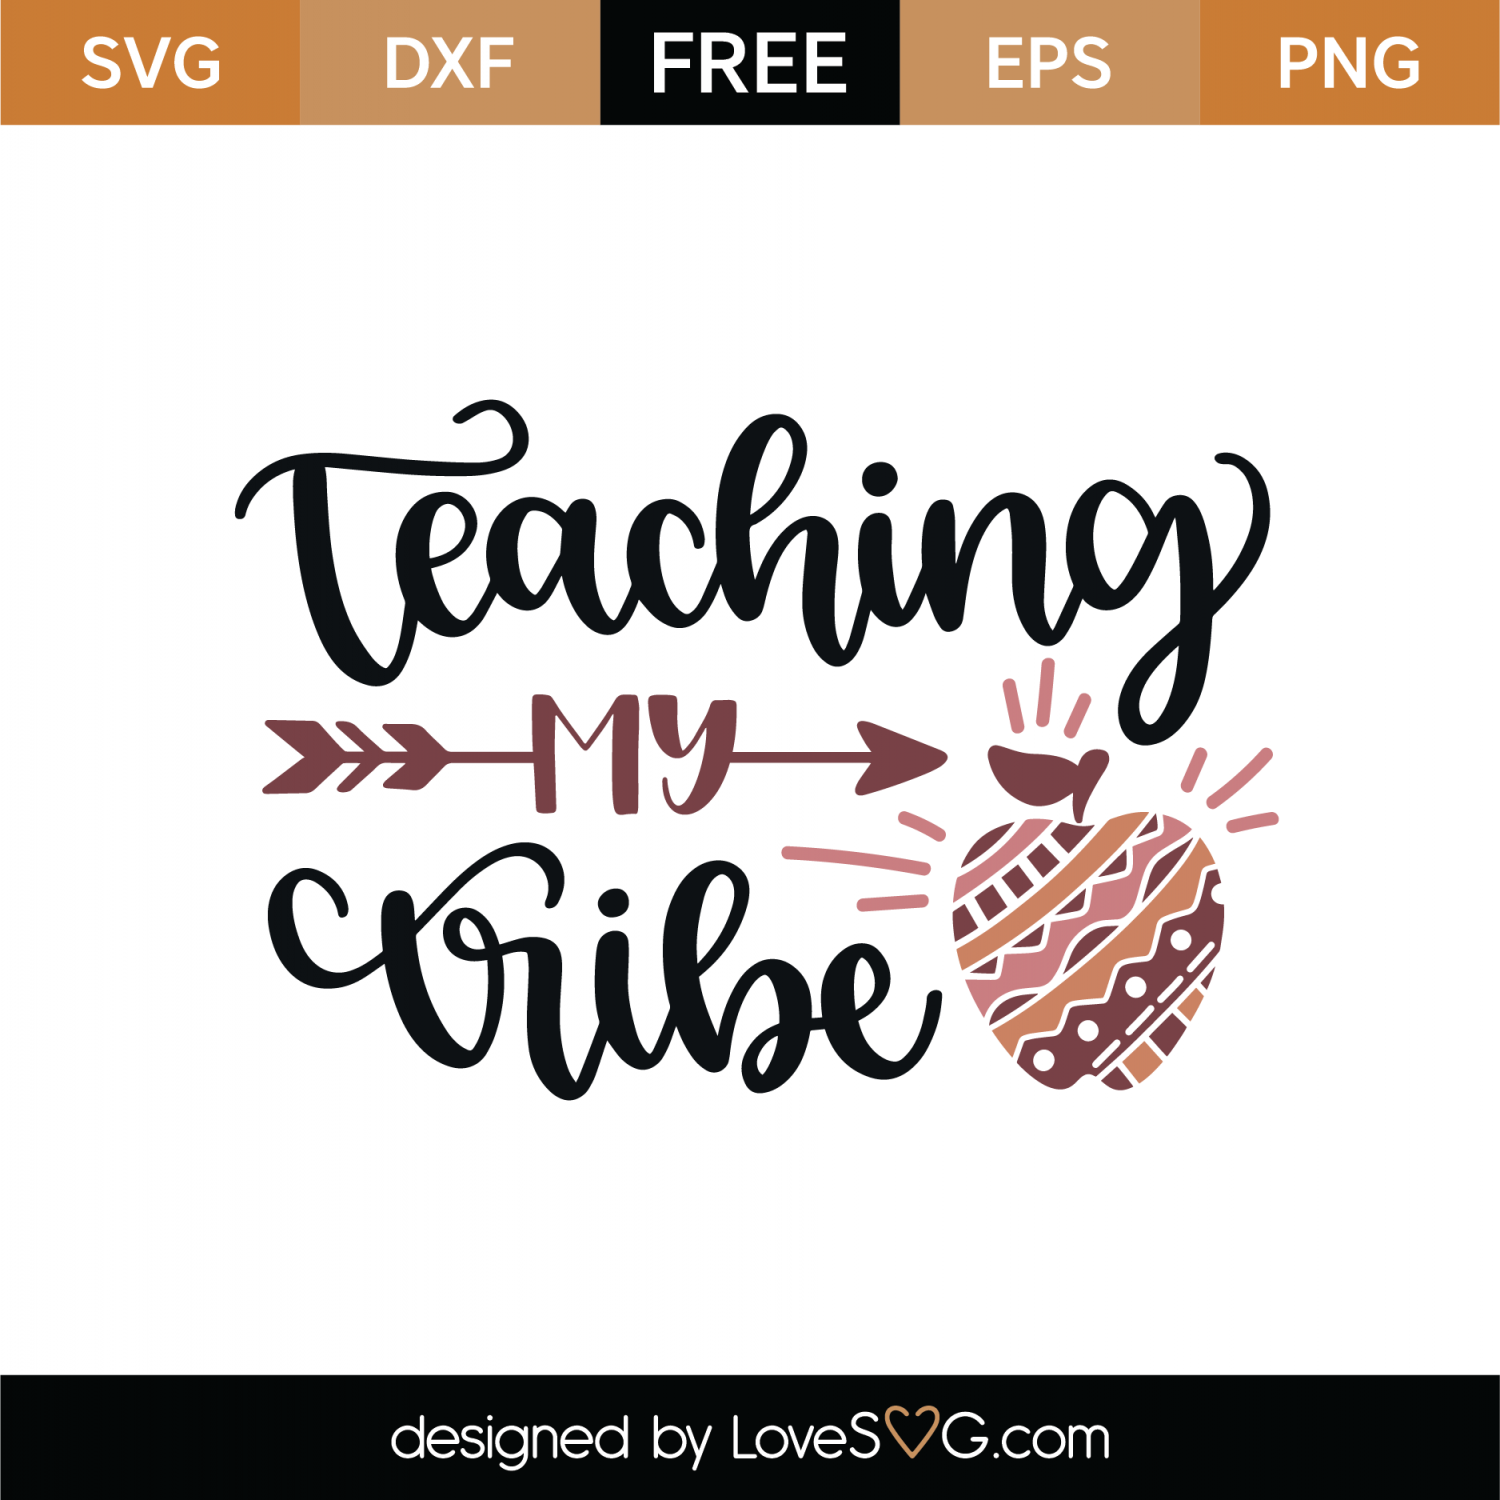 Download Free Teaching My Tribe SVG Cut File | Lovesvg.com